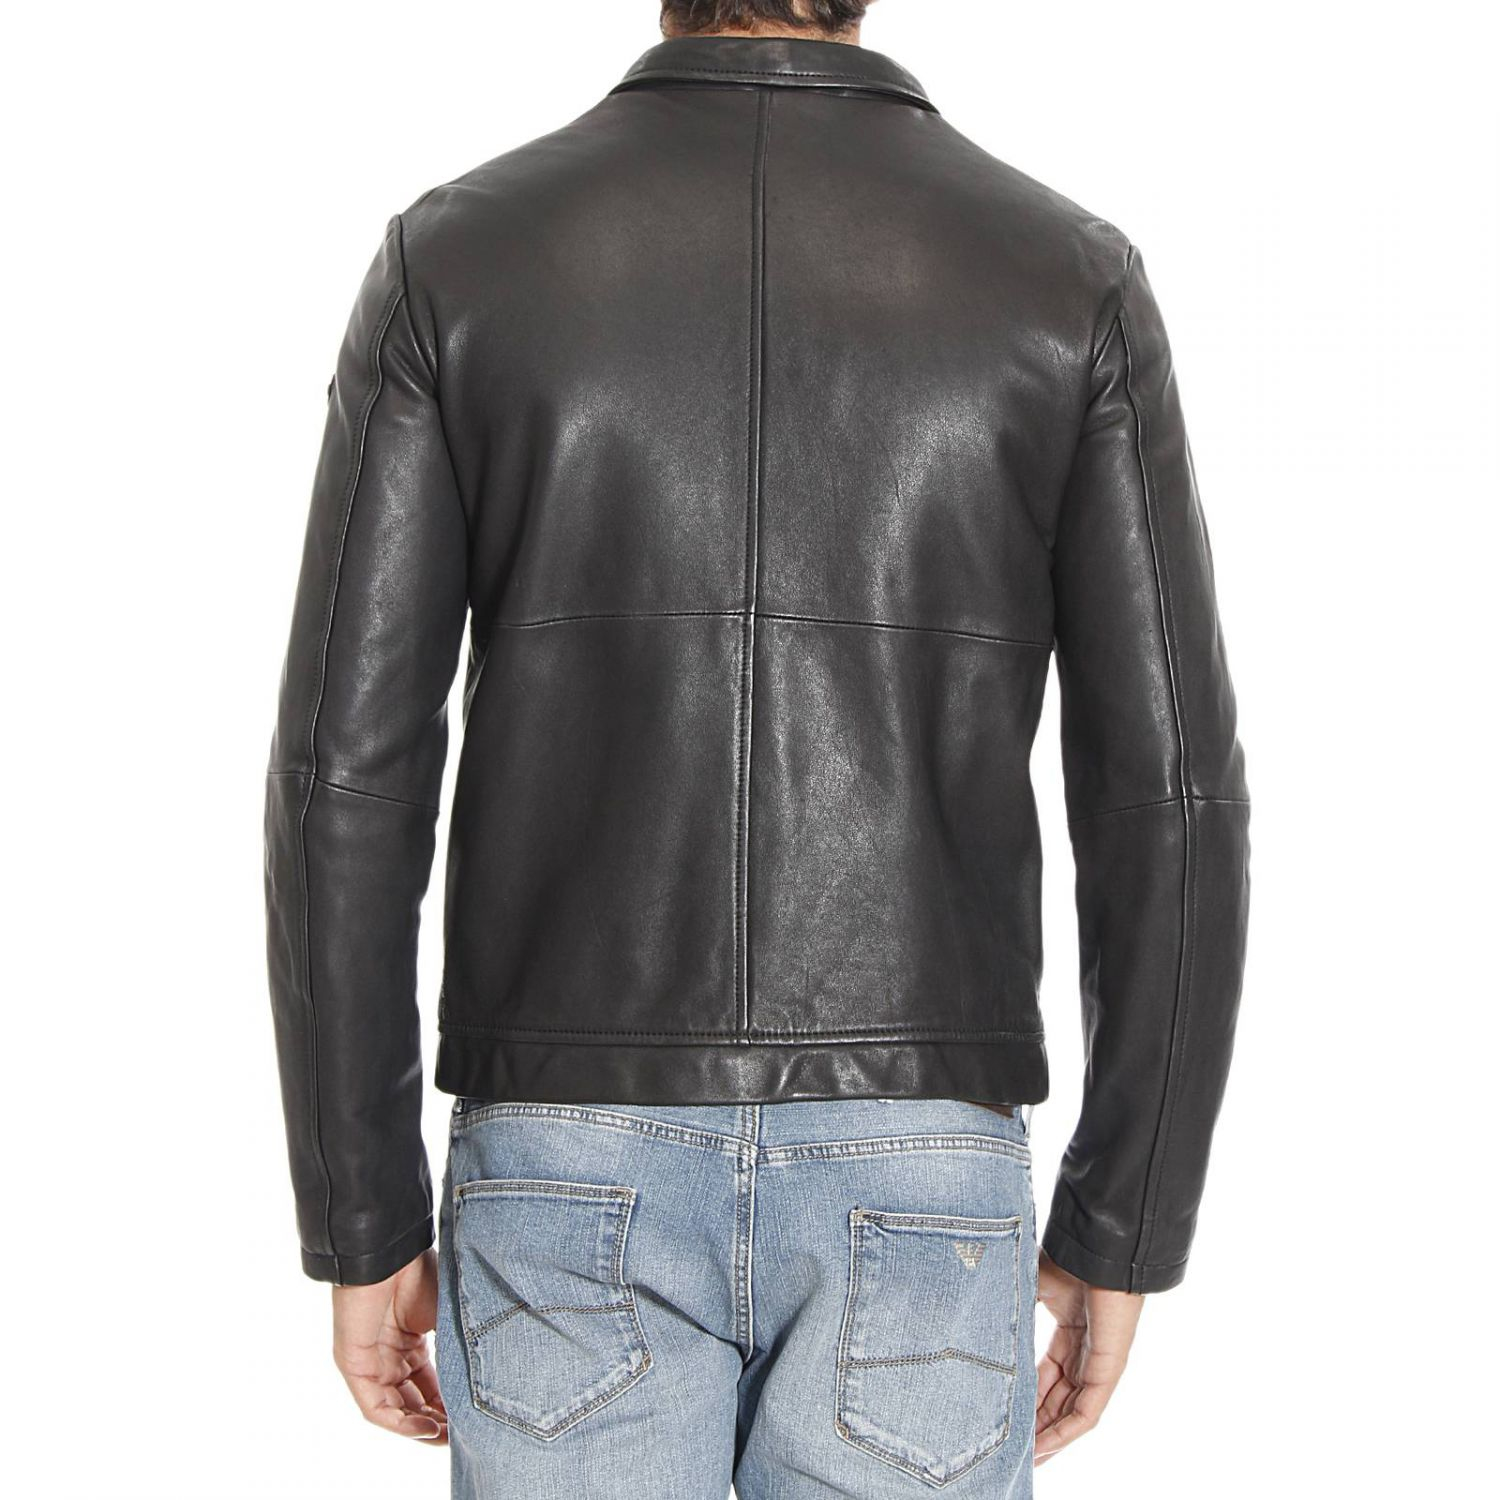 Lyst - Armani Jeans Spread-Collar Leather Biker Jacket in Black for Men